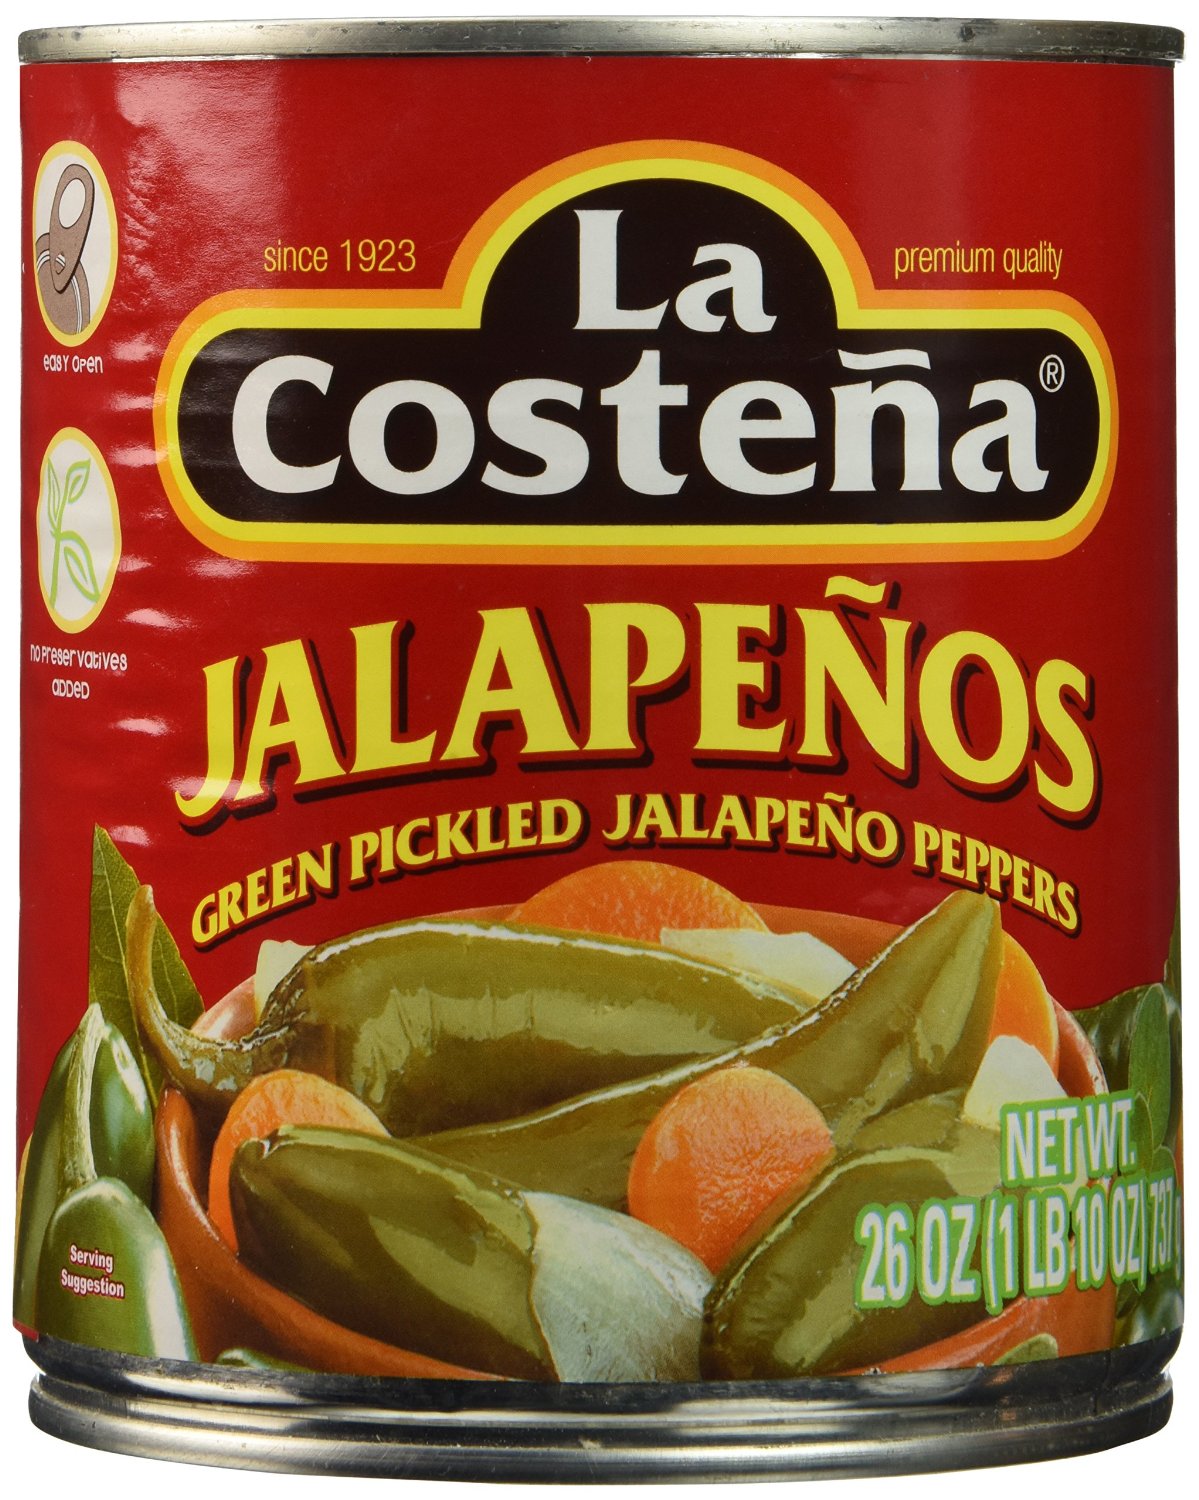 Green Pickled Jalapenos Peppers, Green Pickled Jalapenos - pepper